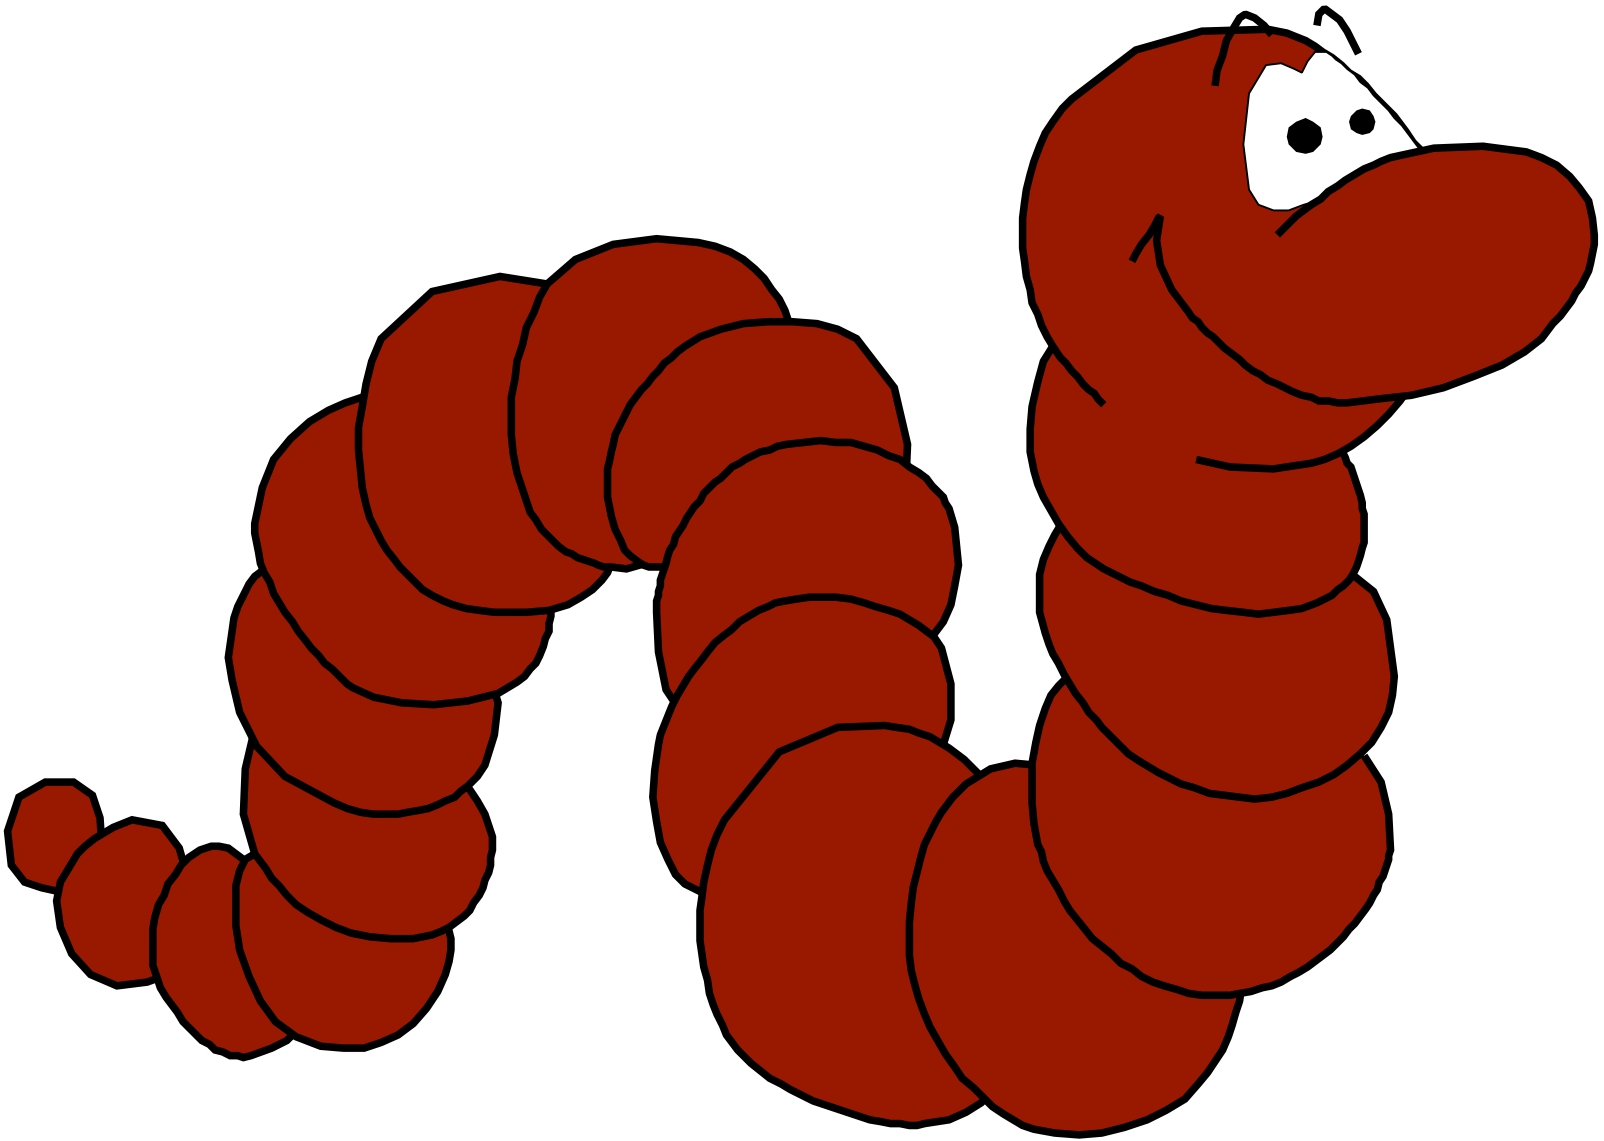 earthworm clipart - photo #12